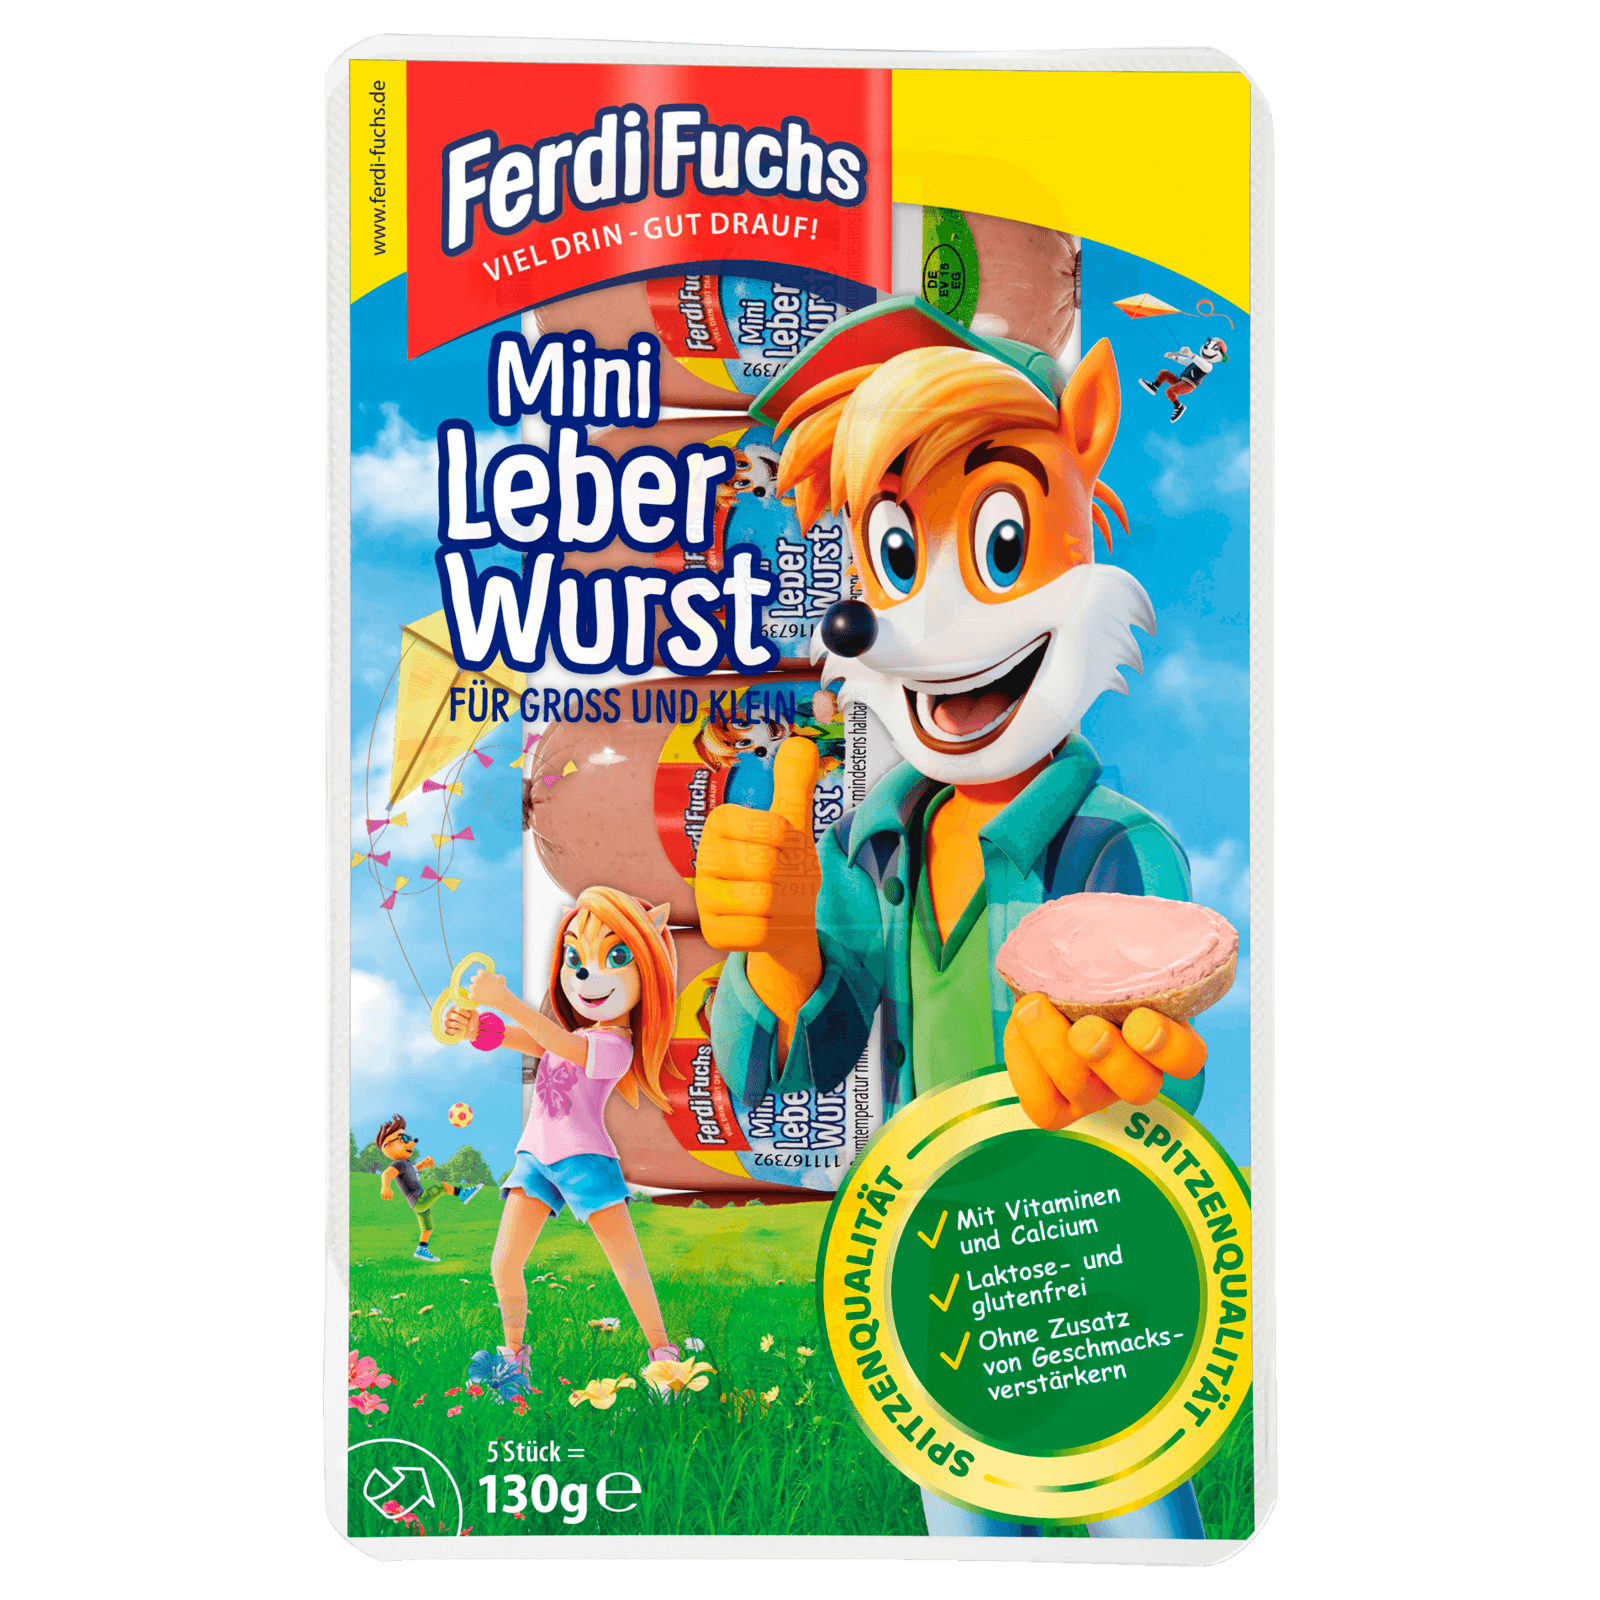 Ferdi Fuchs Mini Leberwurst 5x26g bei REWE online bestellen!